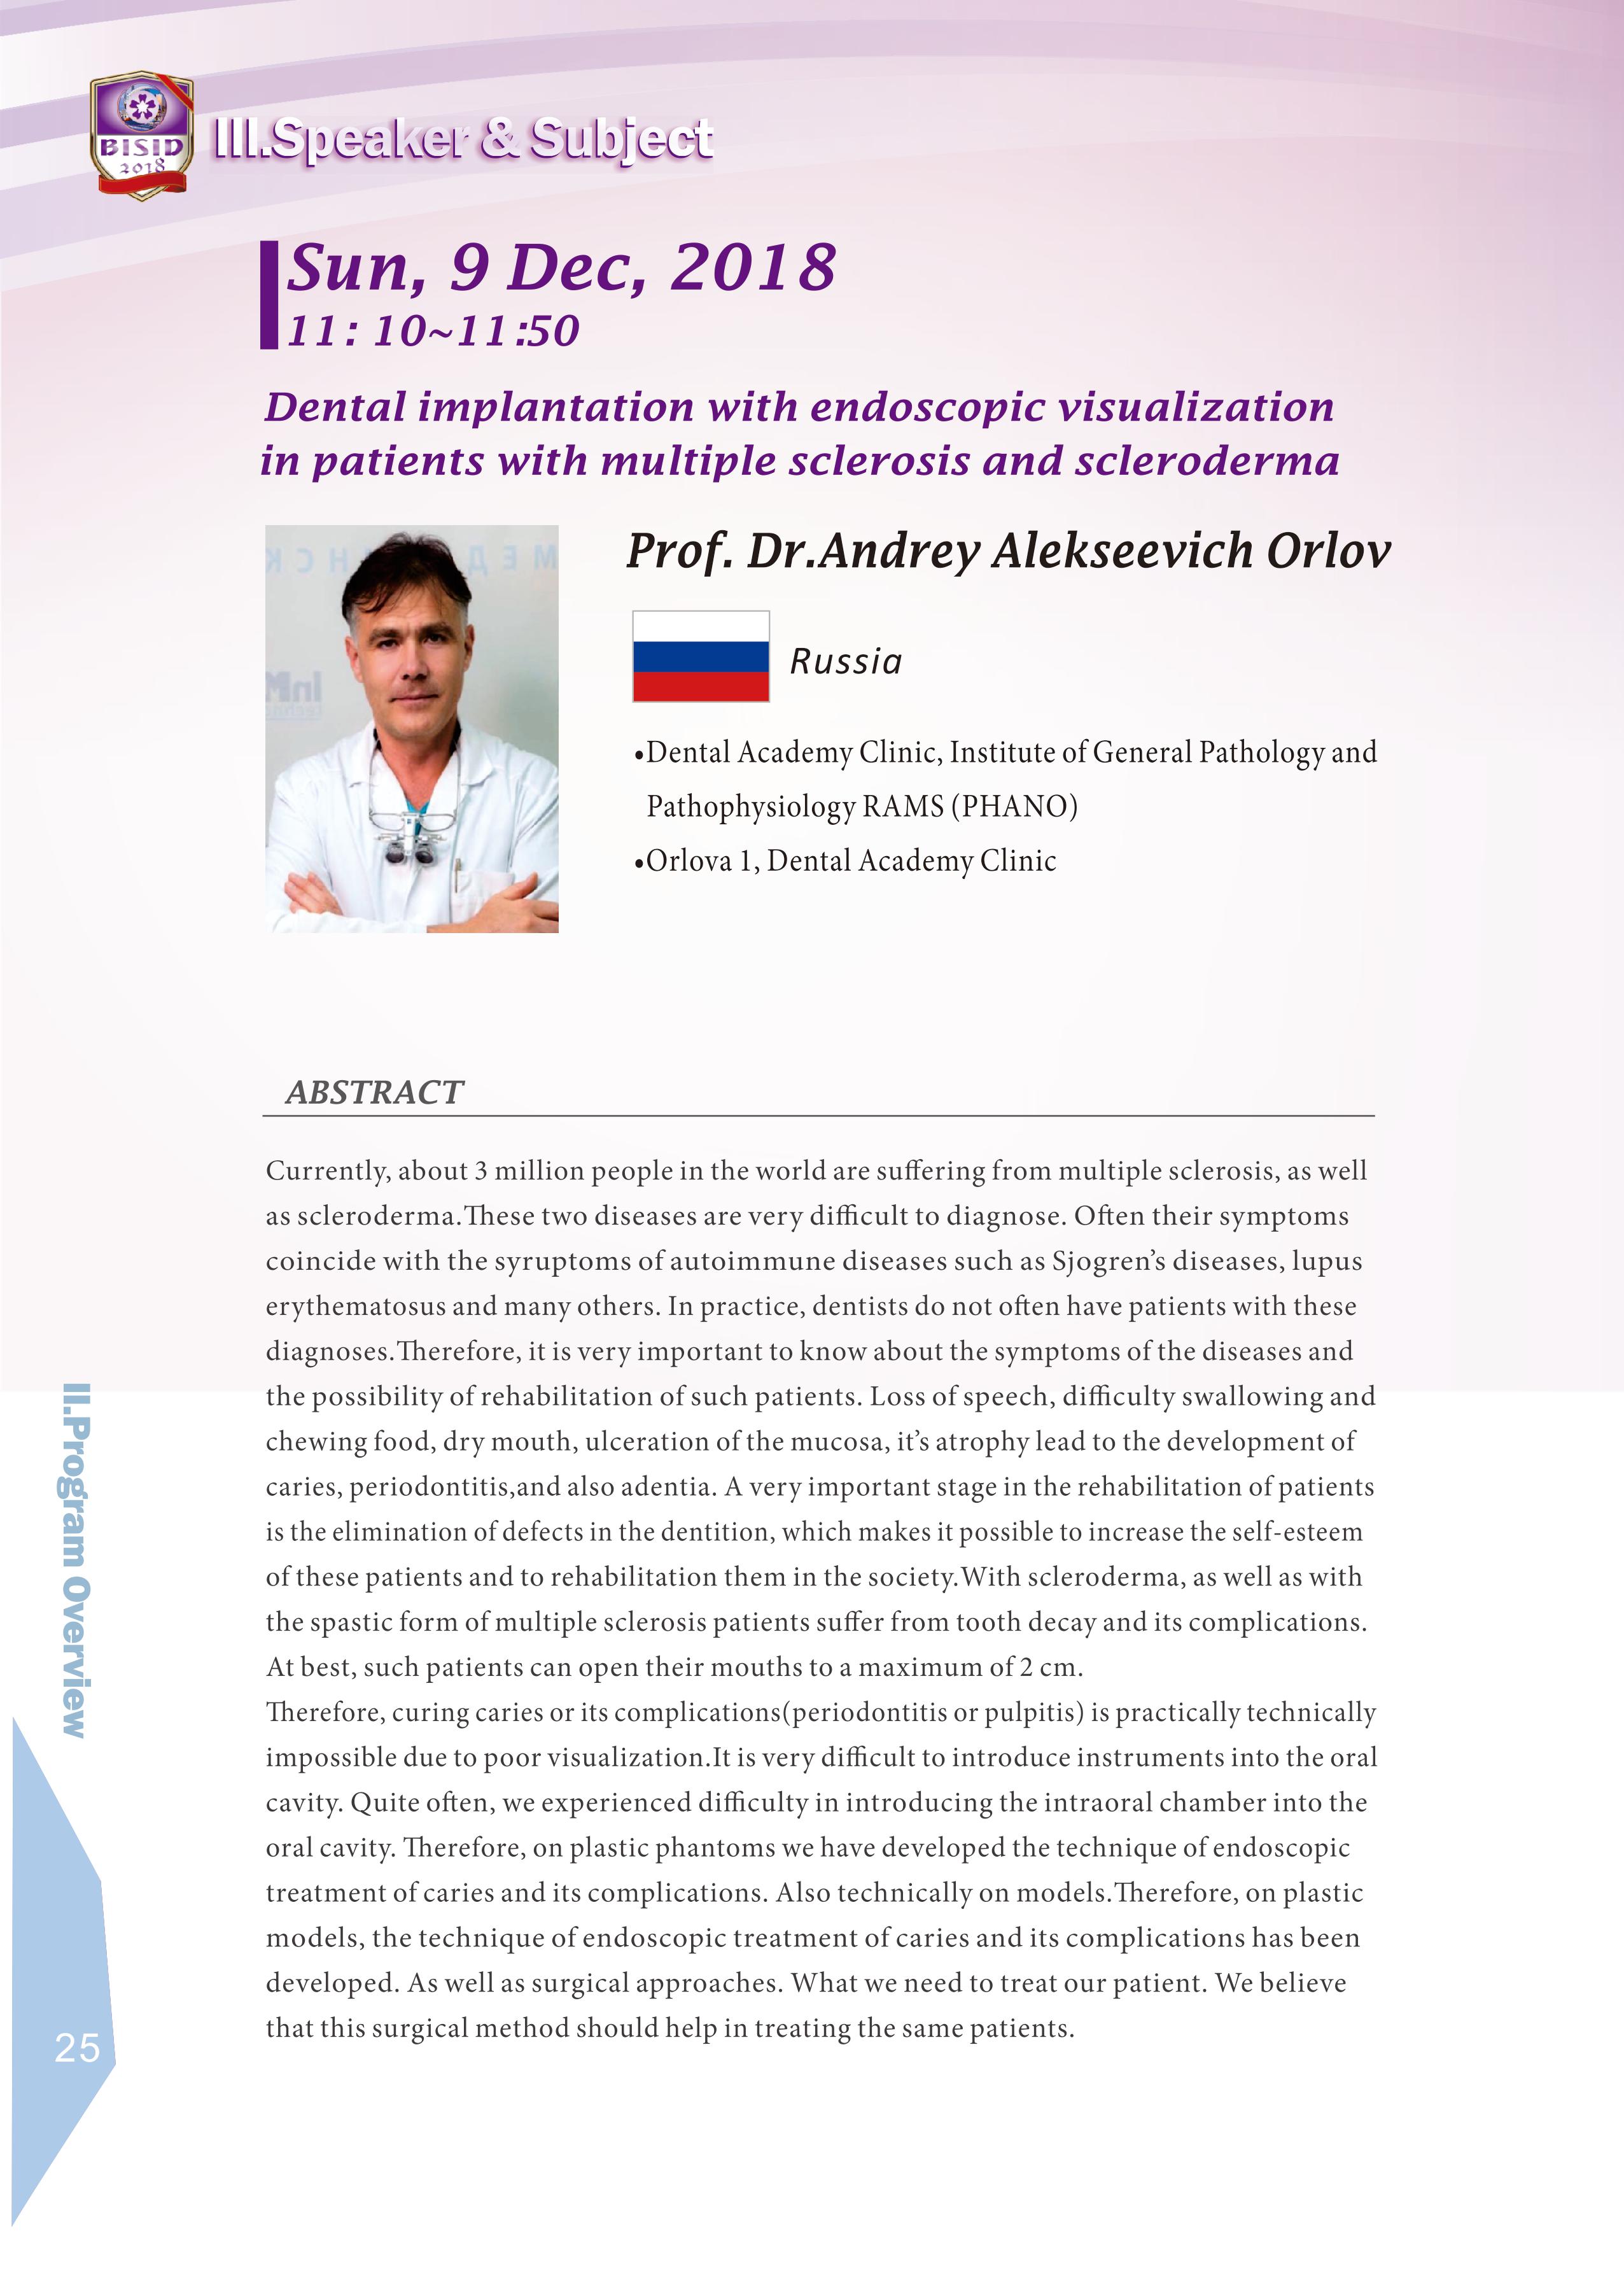 Biomate Internation Symposium of Implant Dentistry-Prof.Dr.Andrey Alekseevich Orlov